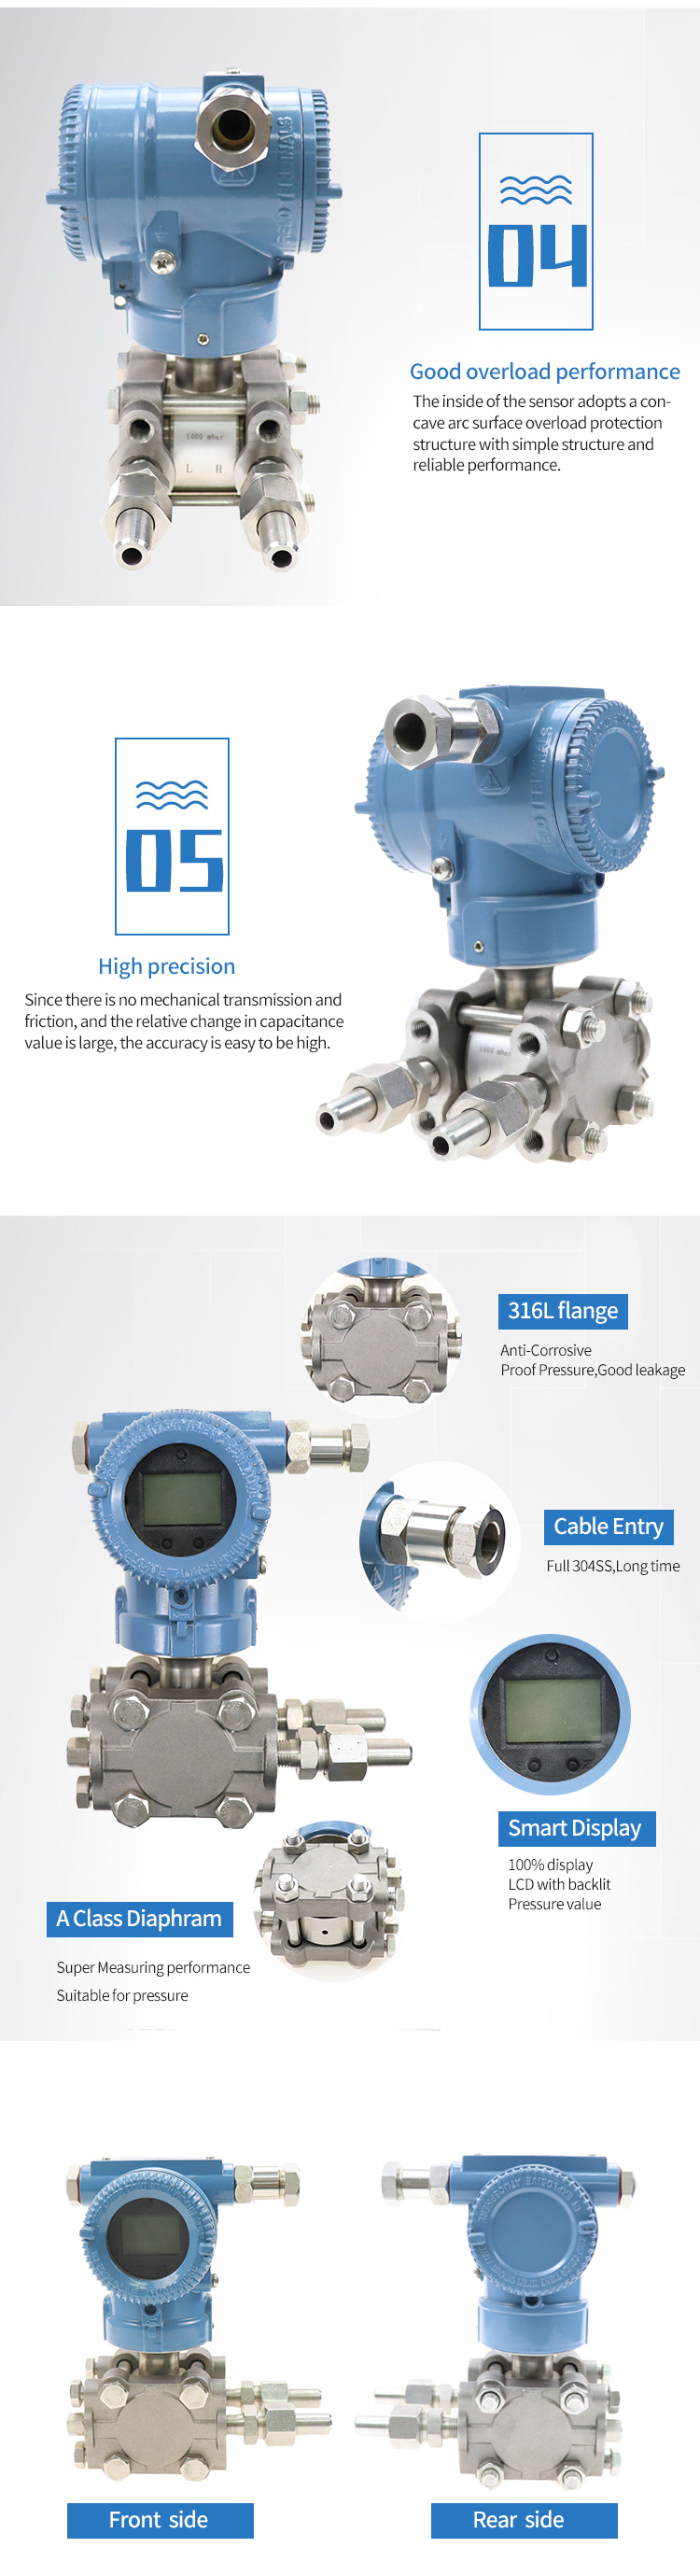 Differential Pressure Sensor 3051 Differential Pressure Transmitter Differential Pressure Sensor Cost